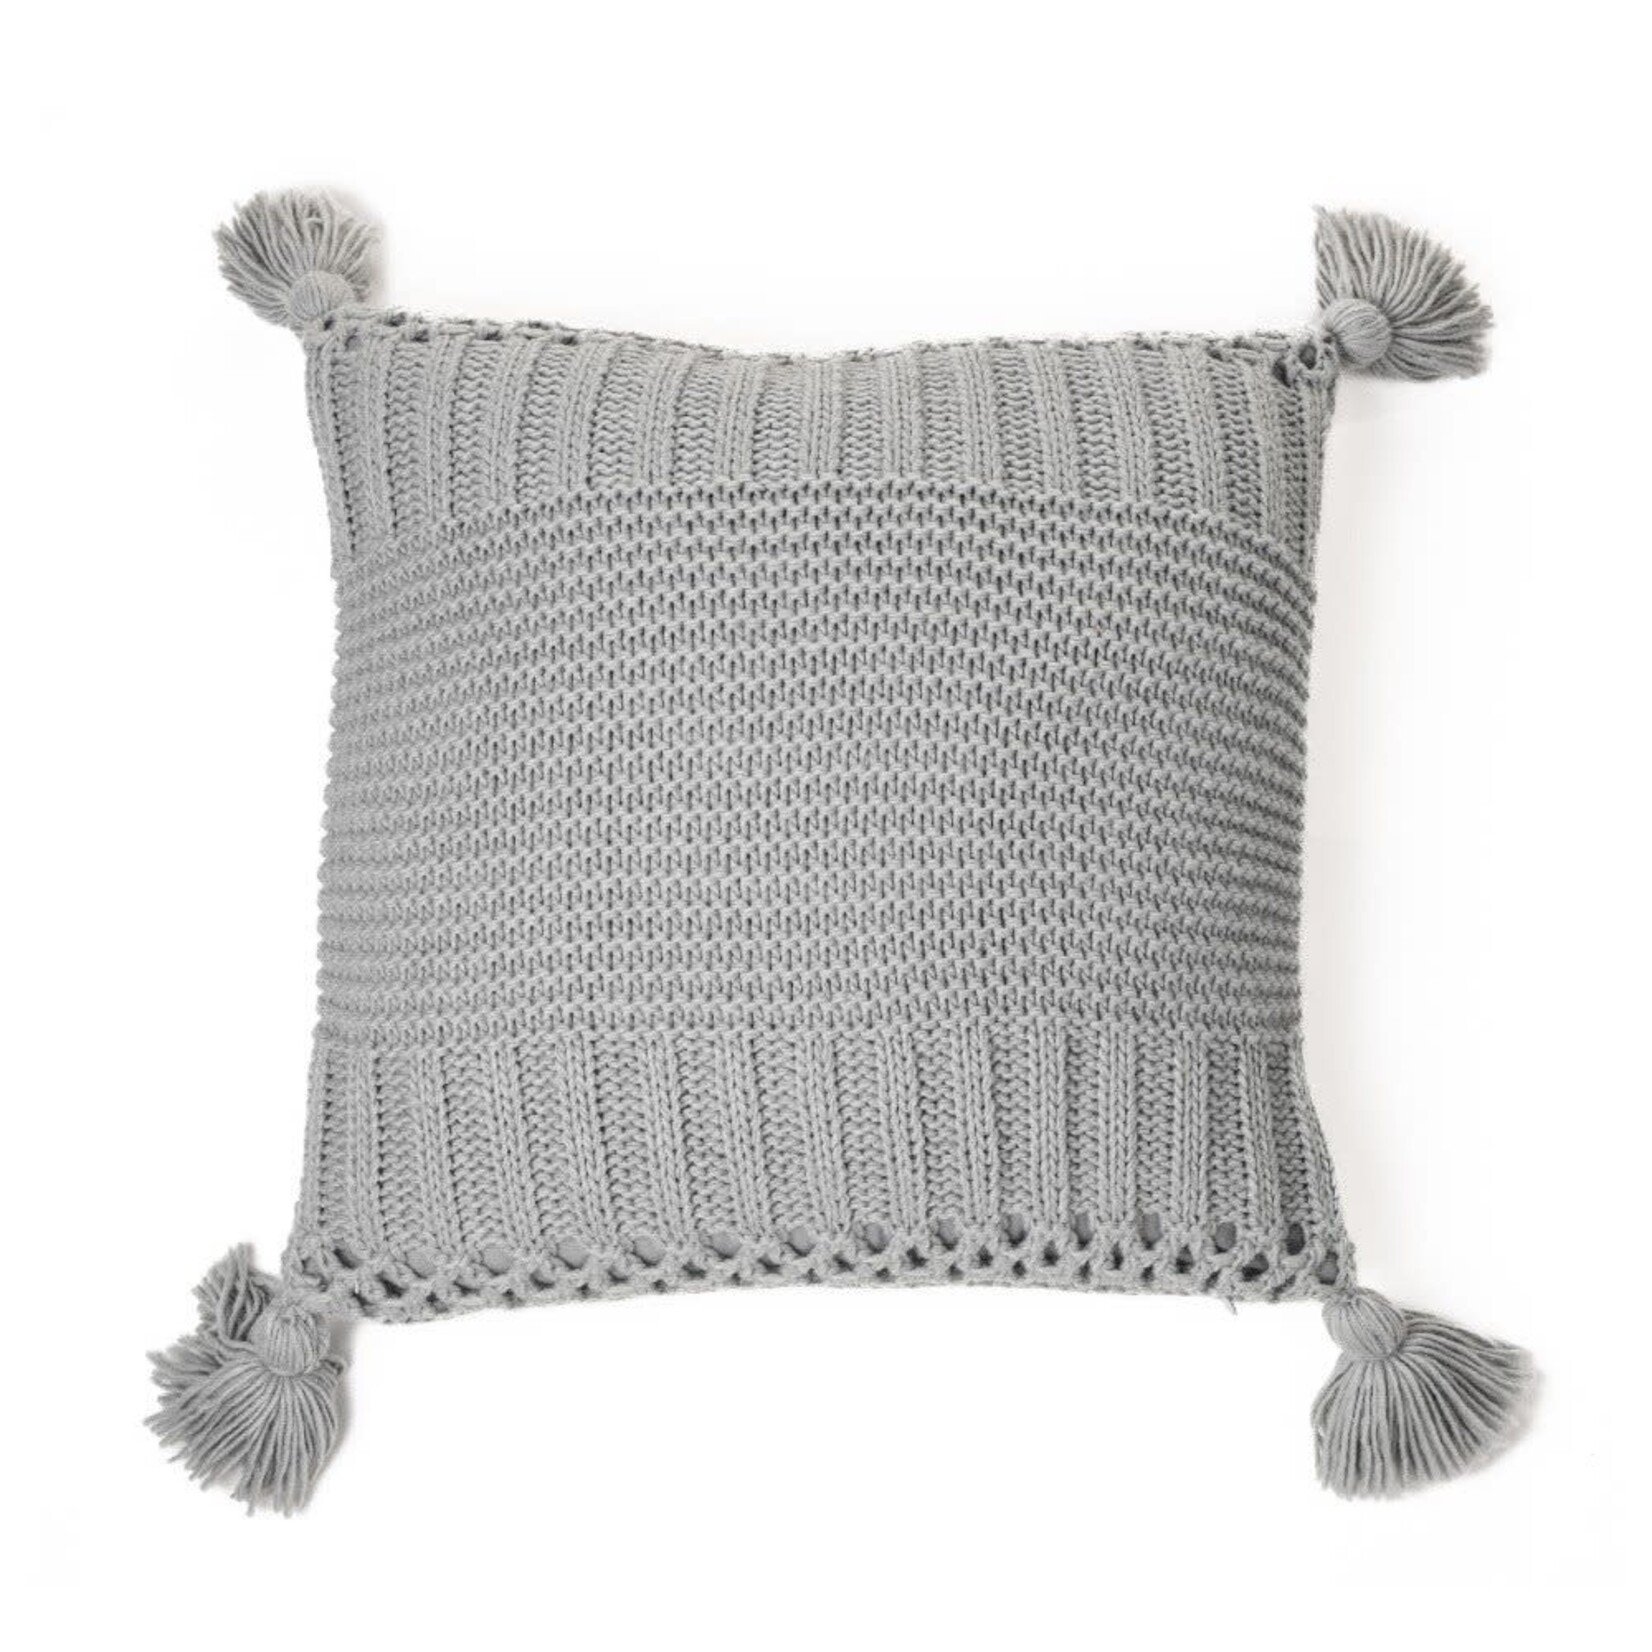 Brunelli Shawn Knit Pillows